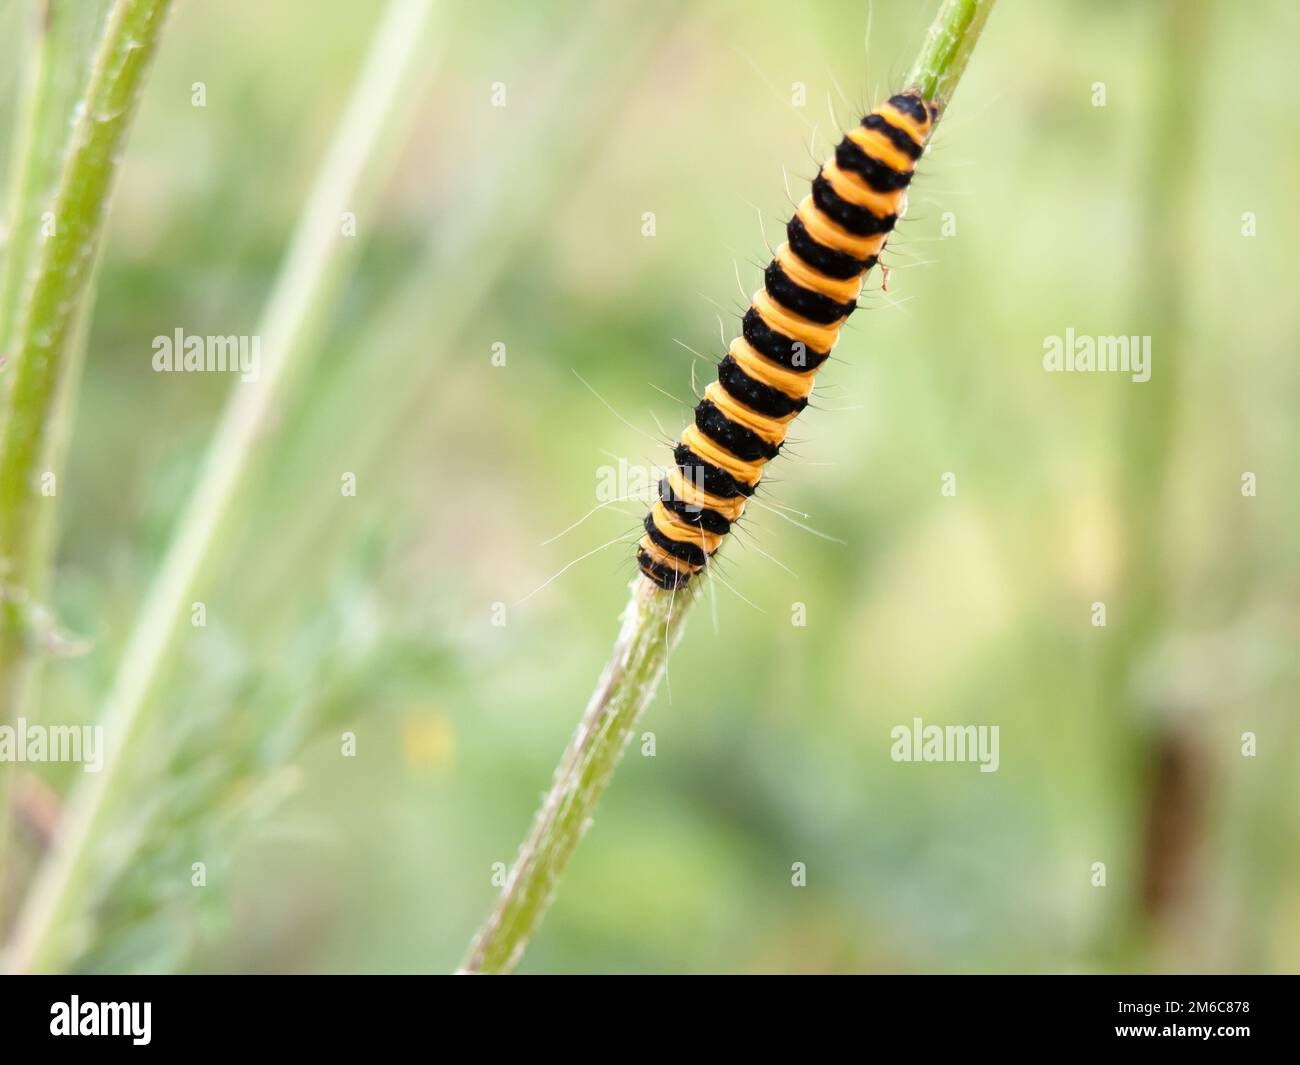 Single yellow and black caterpillar crawling down green stem Stock Photo